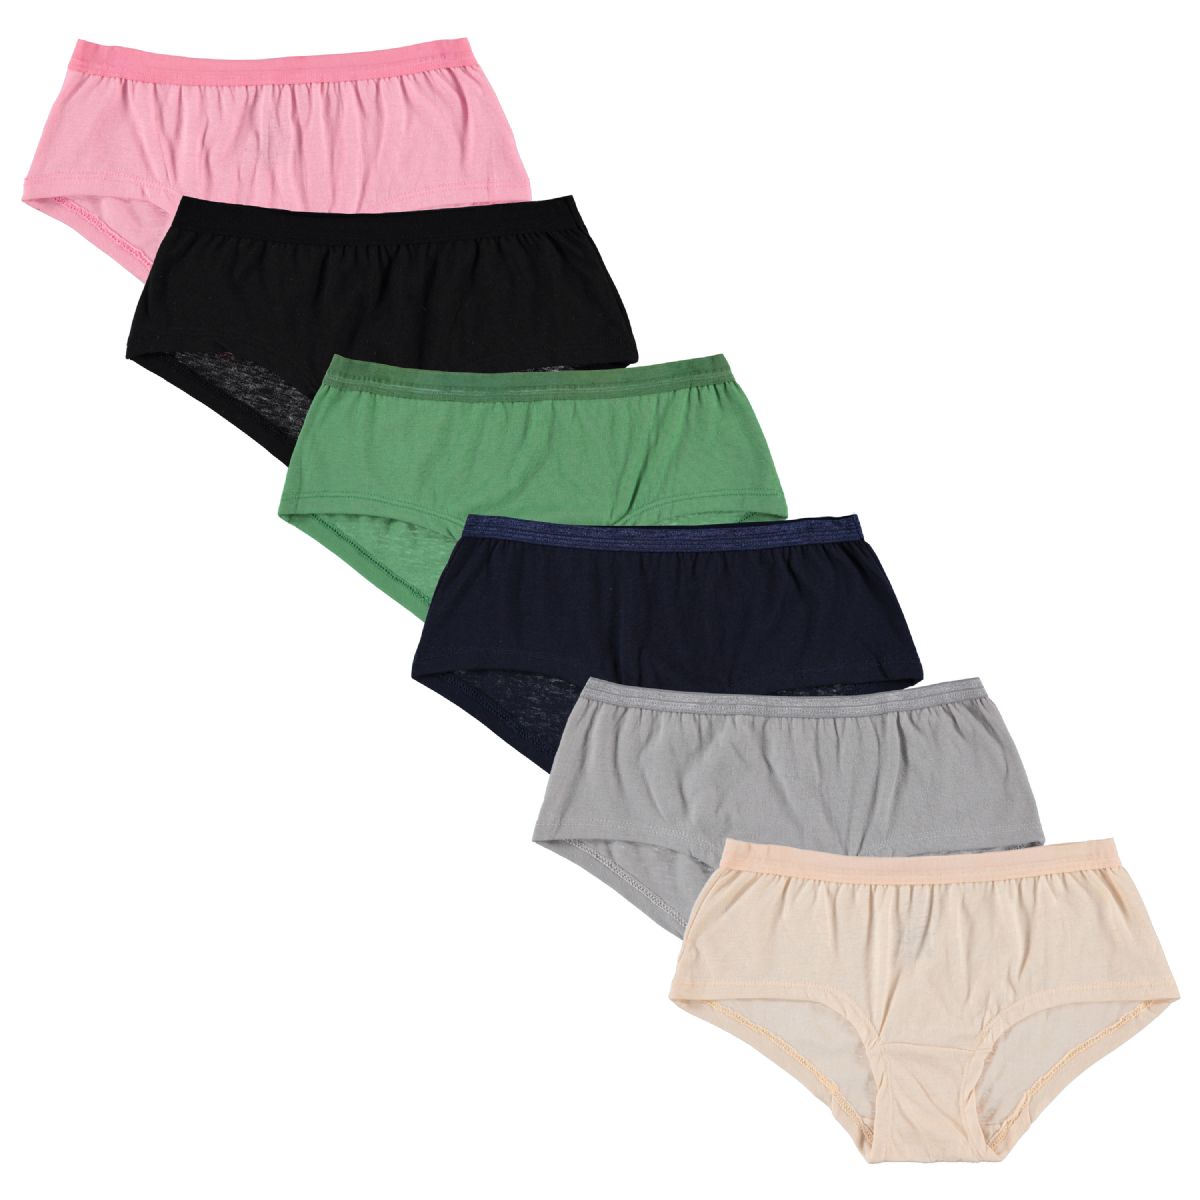 252 Wholesale Yacht & Smith Womens Cotton Lycra Underwear, Panty Briefs, 95% Cotton Soft Assorted Colors, Size Medium